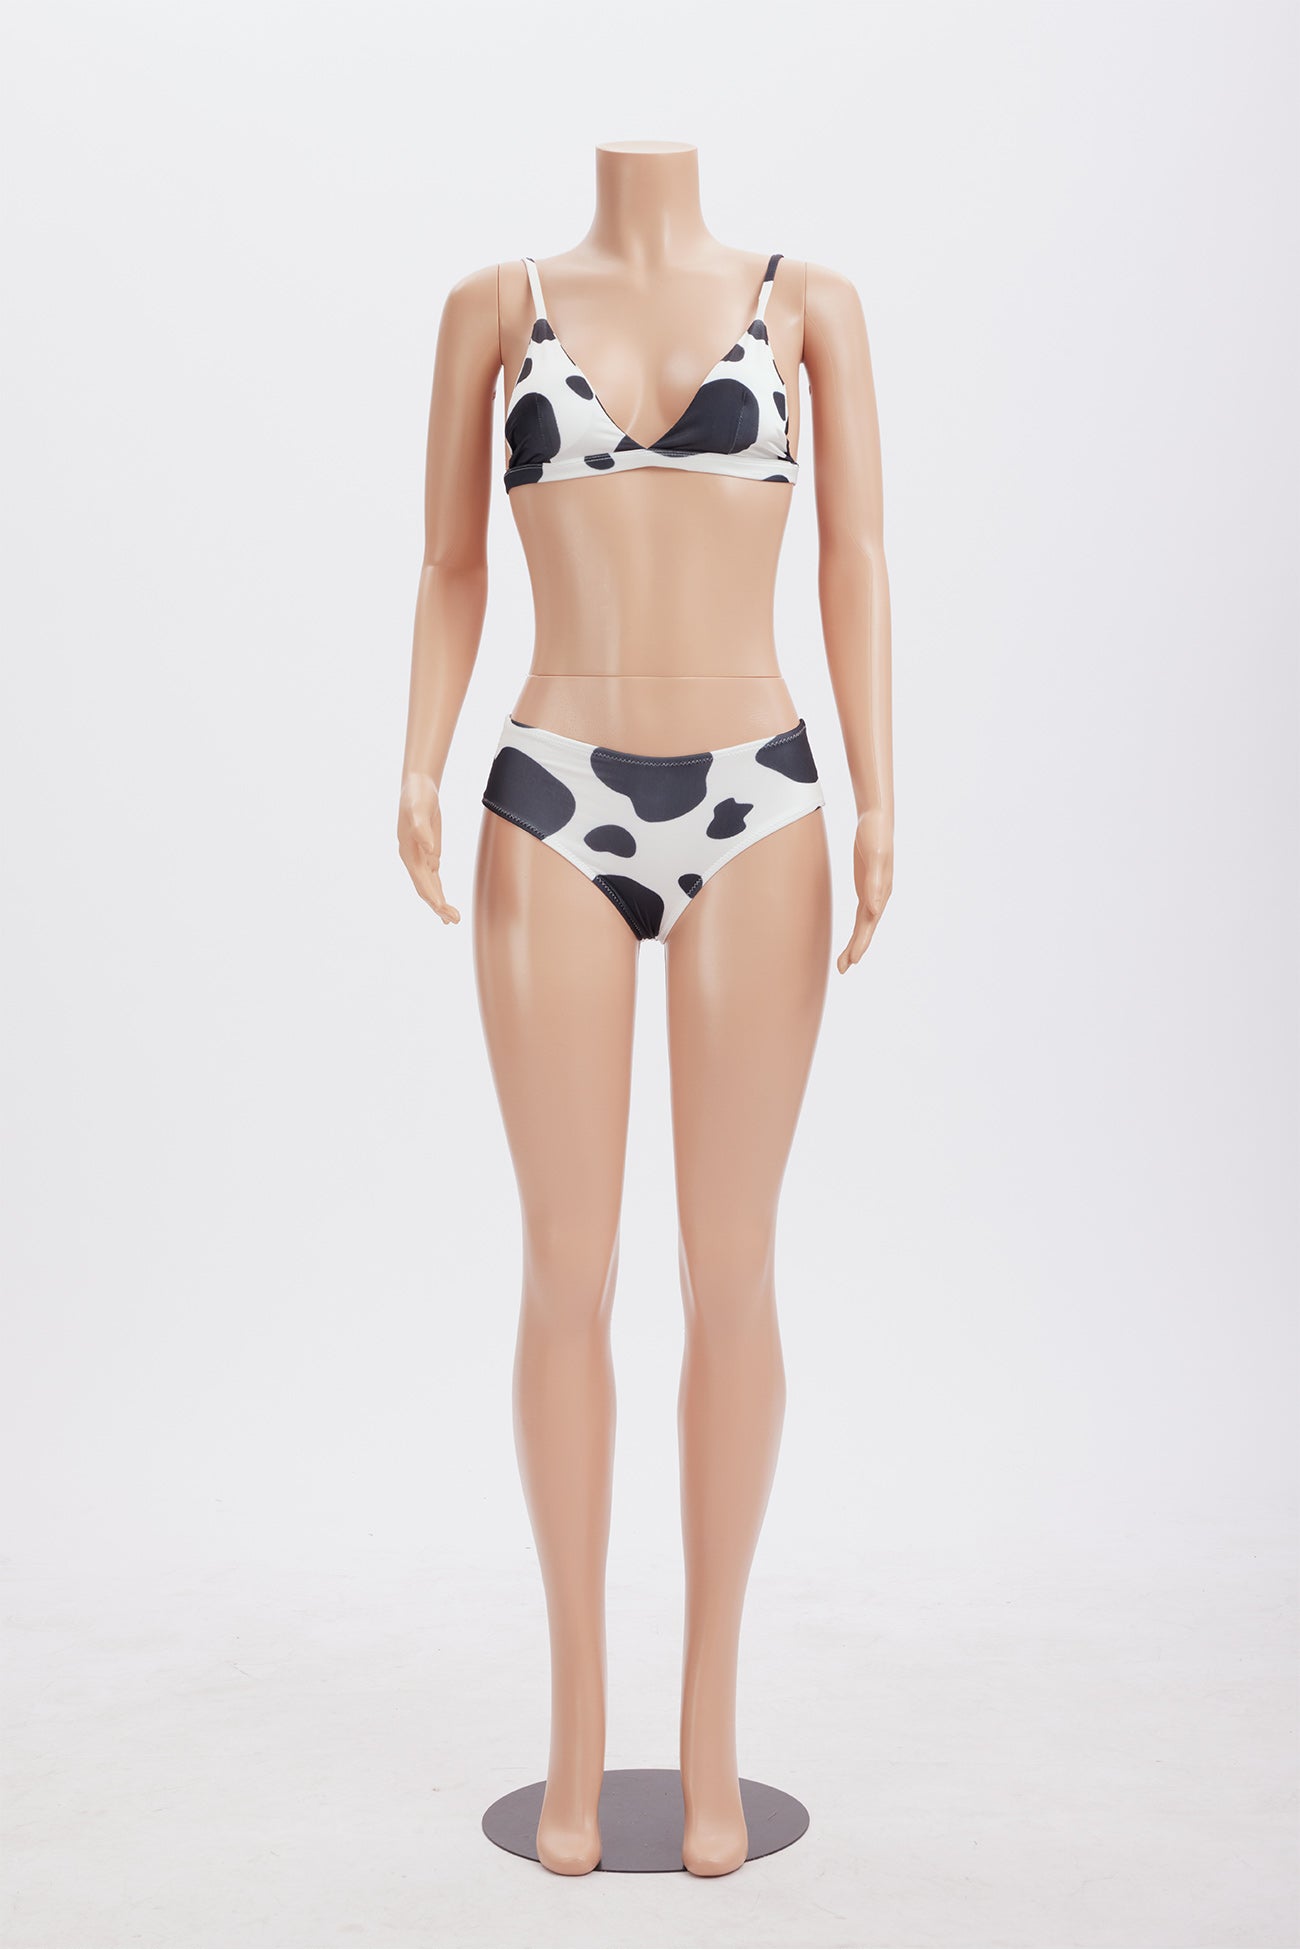 Cow Print Two Piece Bikini Outfits